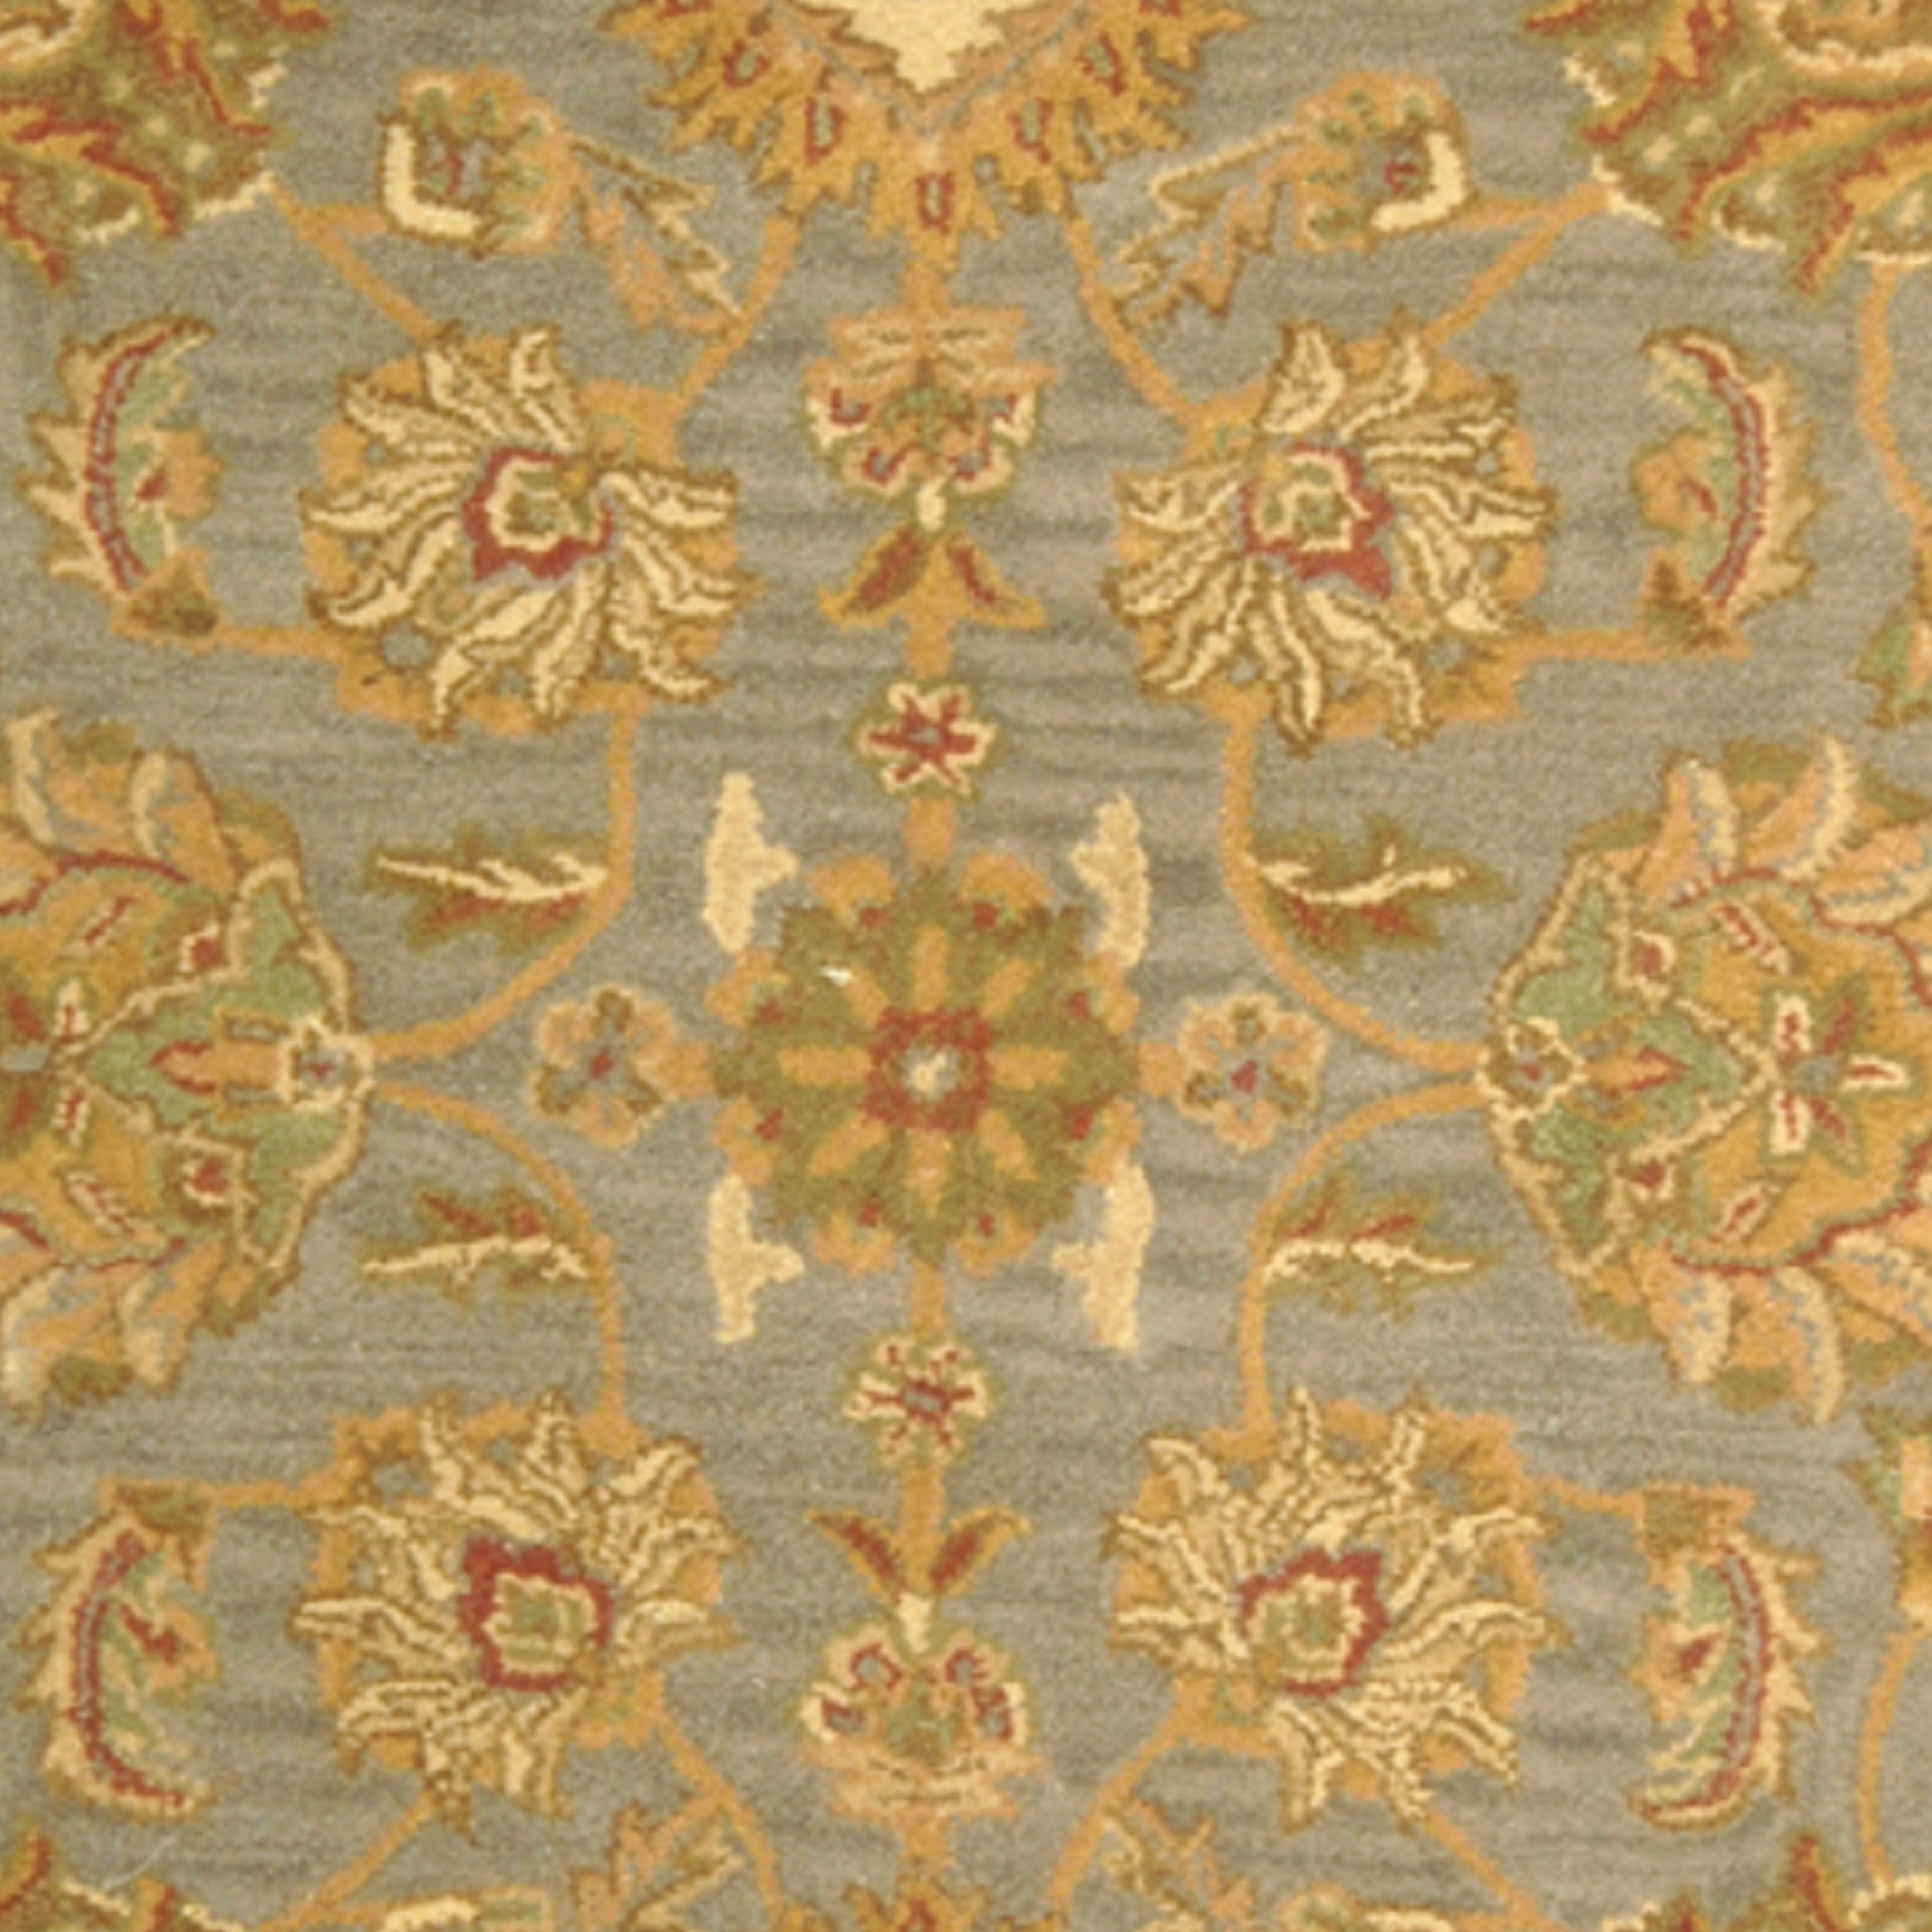 SAFAVIEH Heritage Regis Traditional Wool Area Rug, Blue/Beige, 4'6" x 6'6" Oval - image 3 of 4